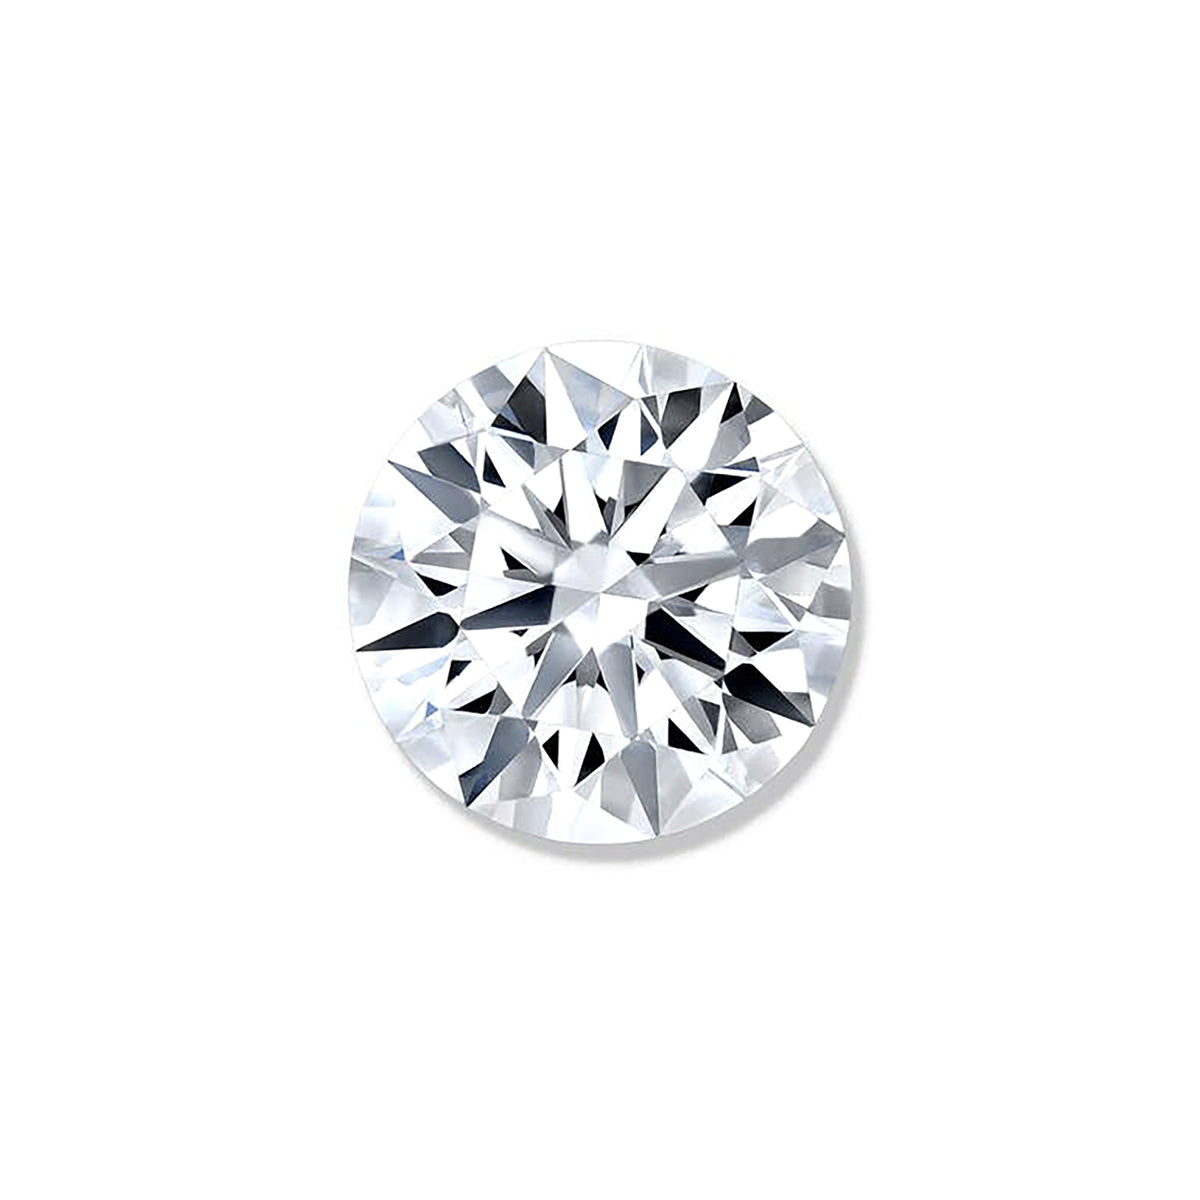 Round Cut Diamond Engagement Rings